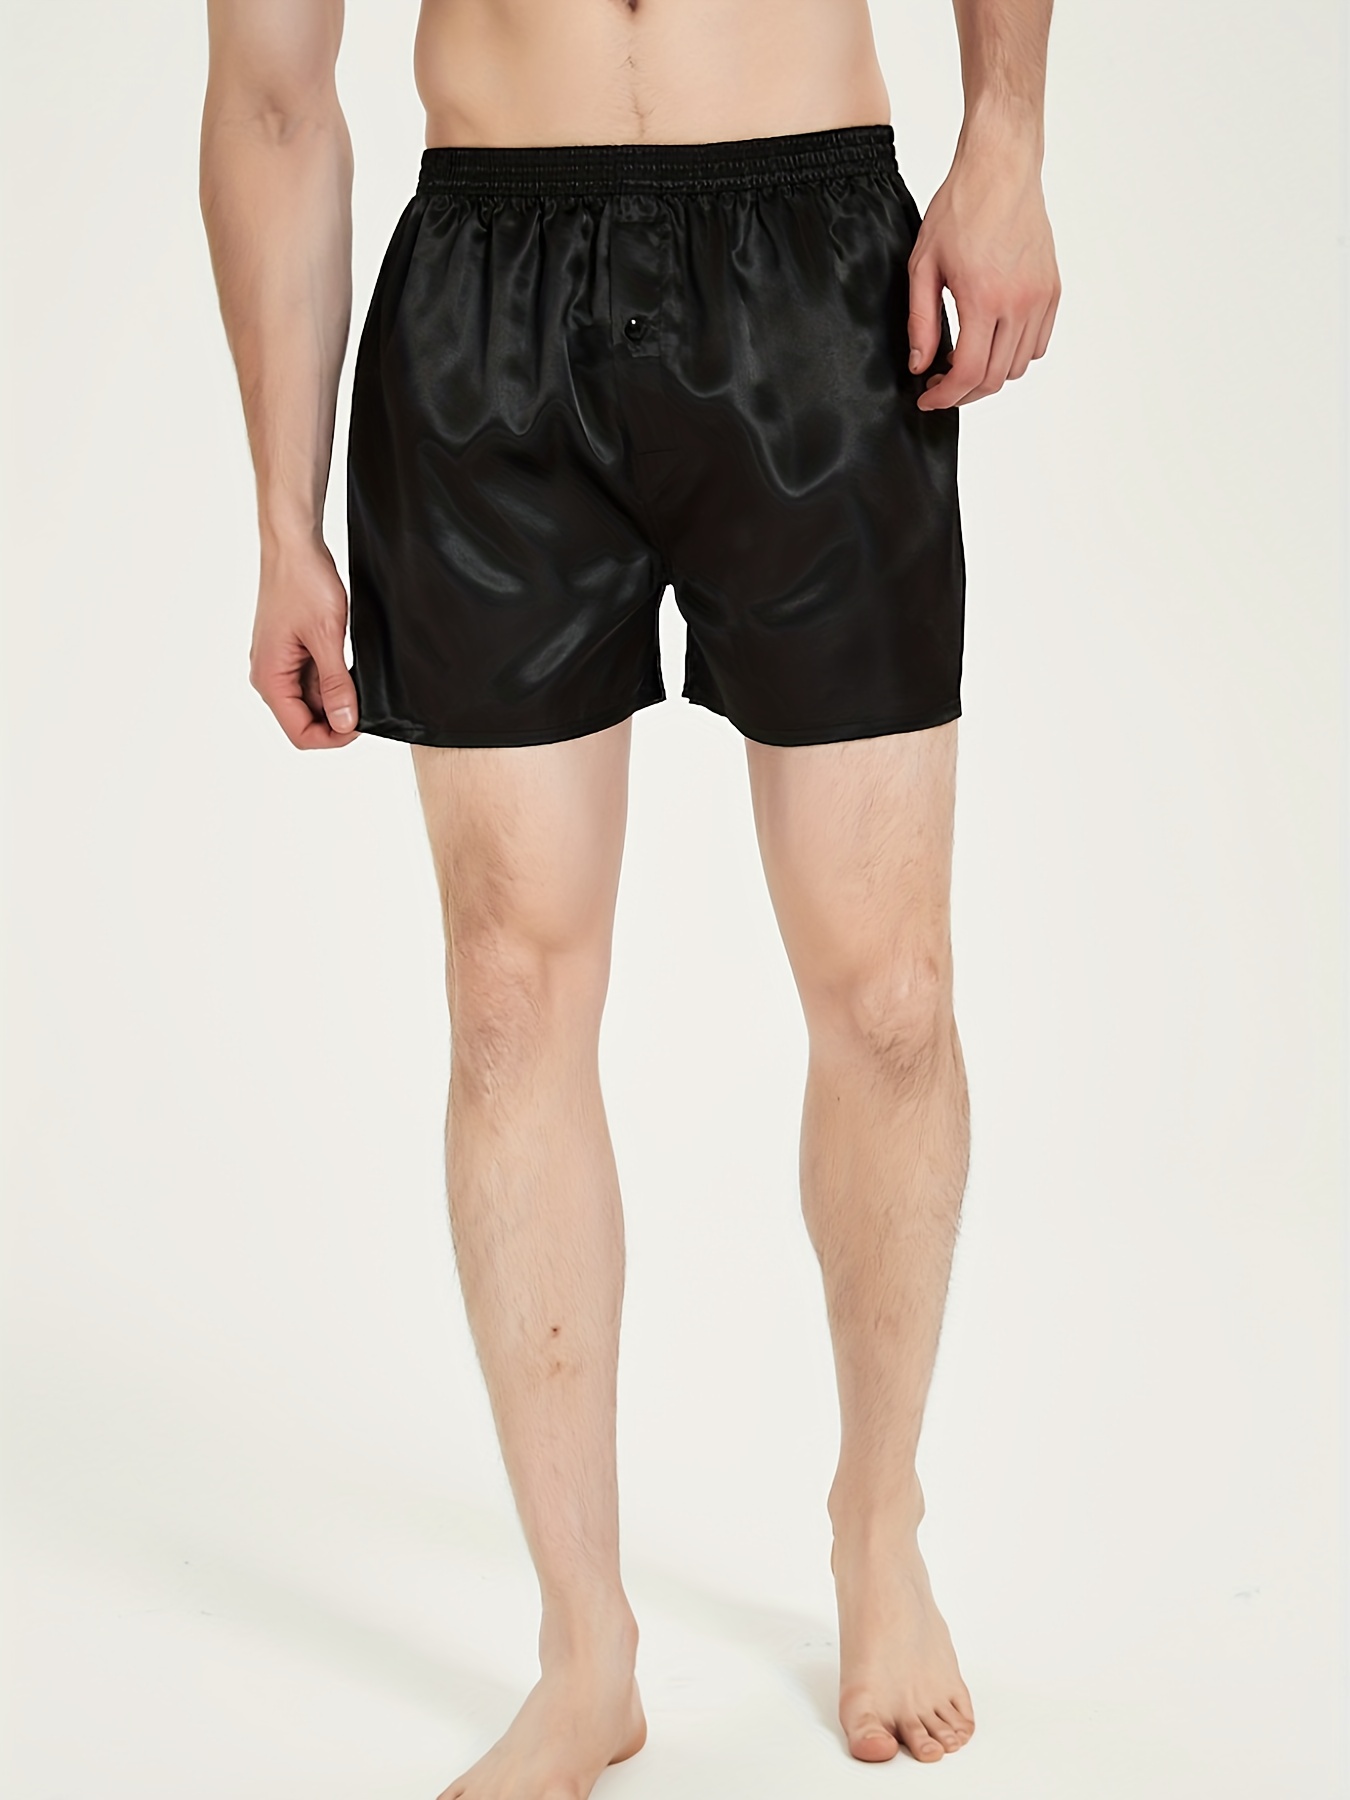 Men Comfy Silk Satin Boxer Shorts Briefs Panties Underwear Trunks